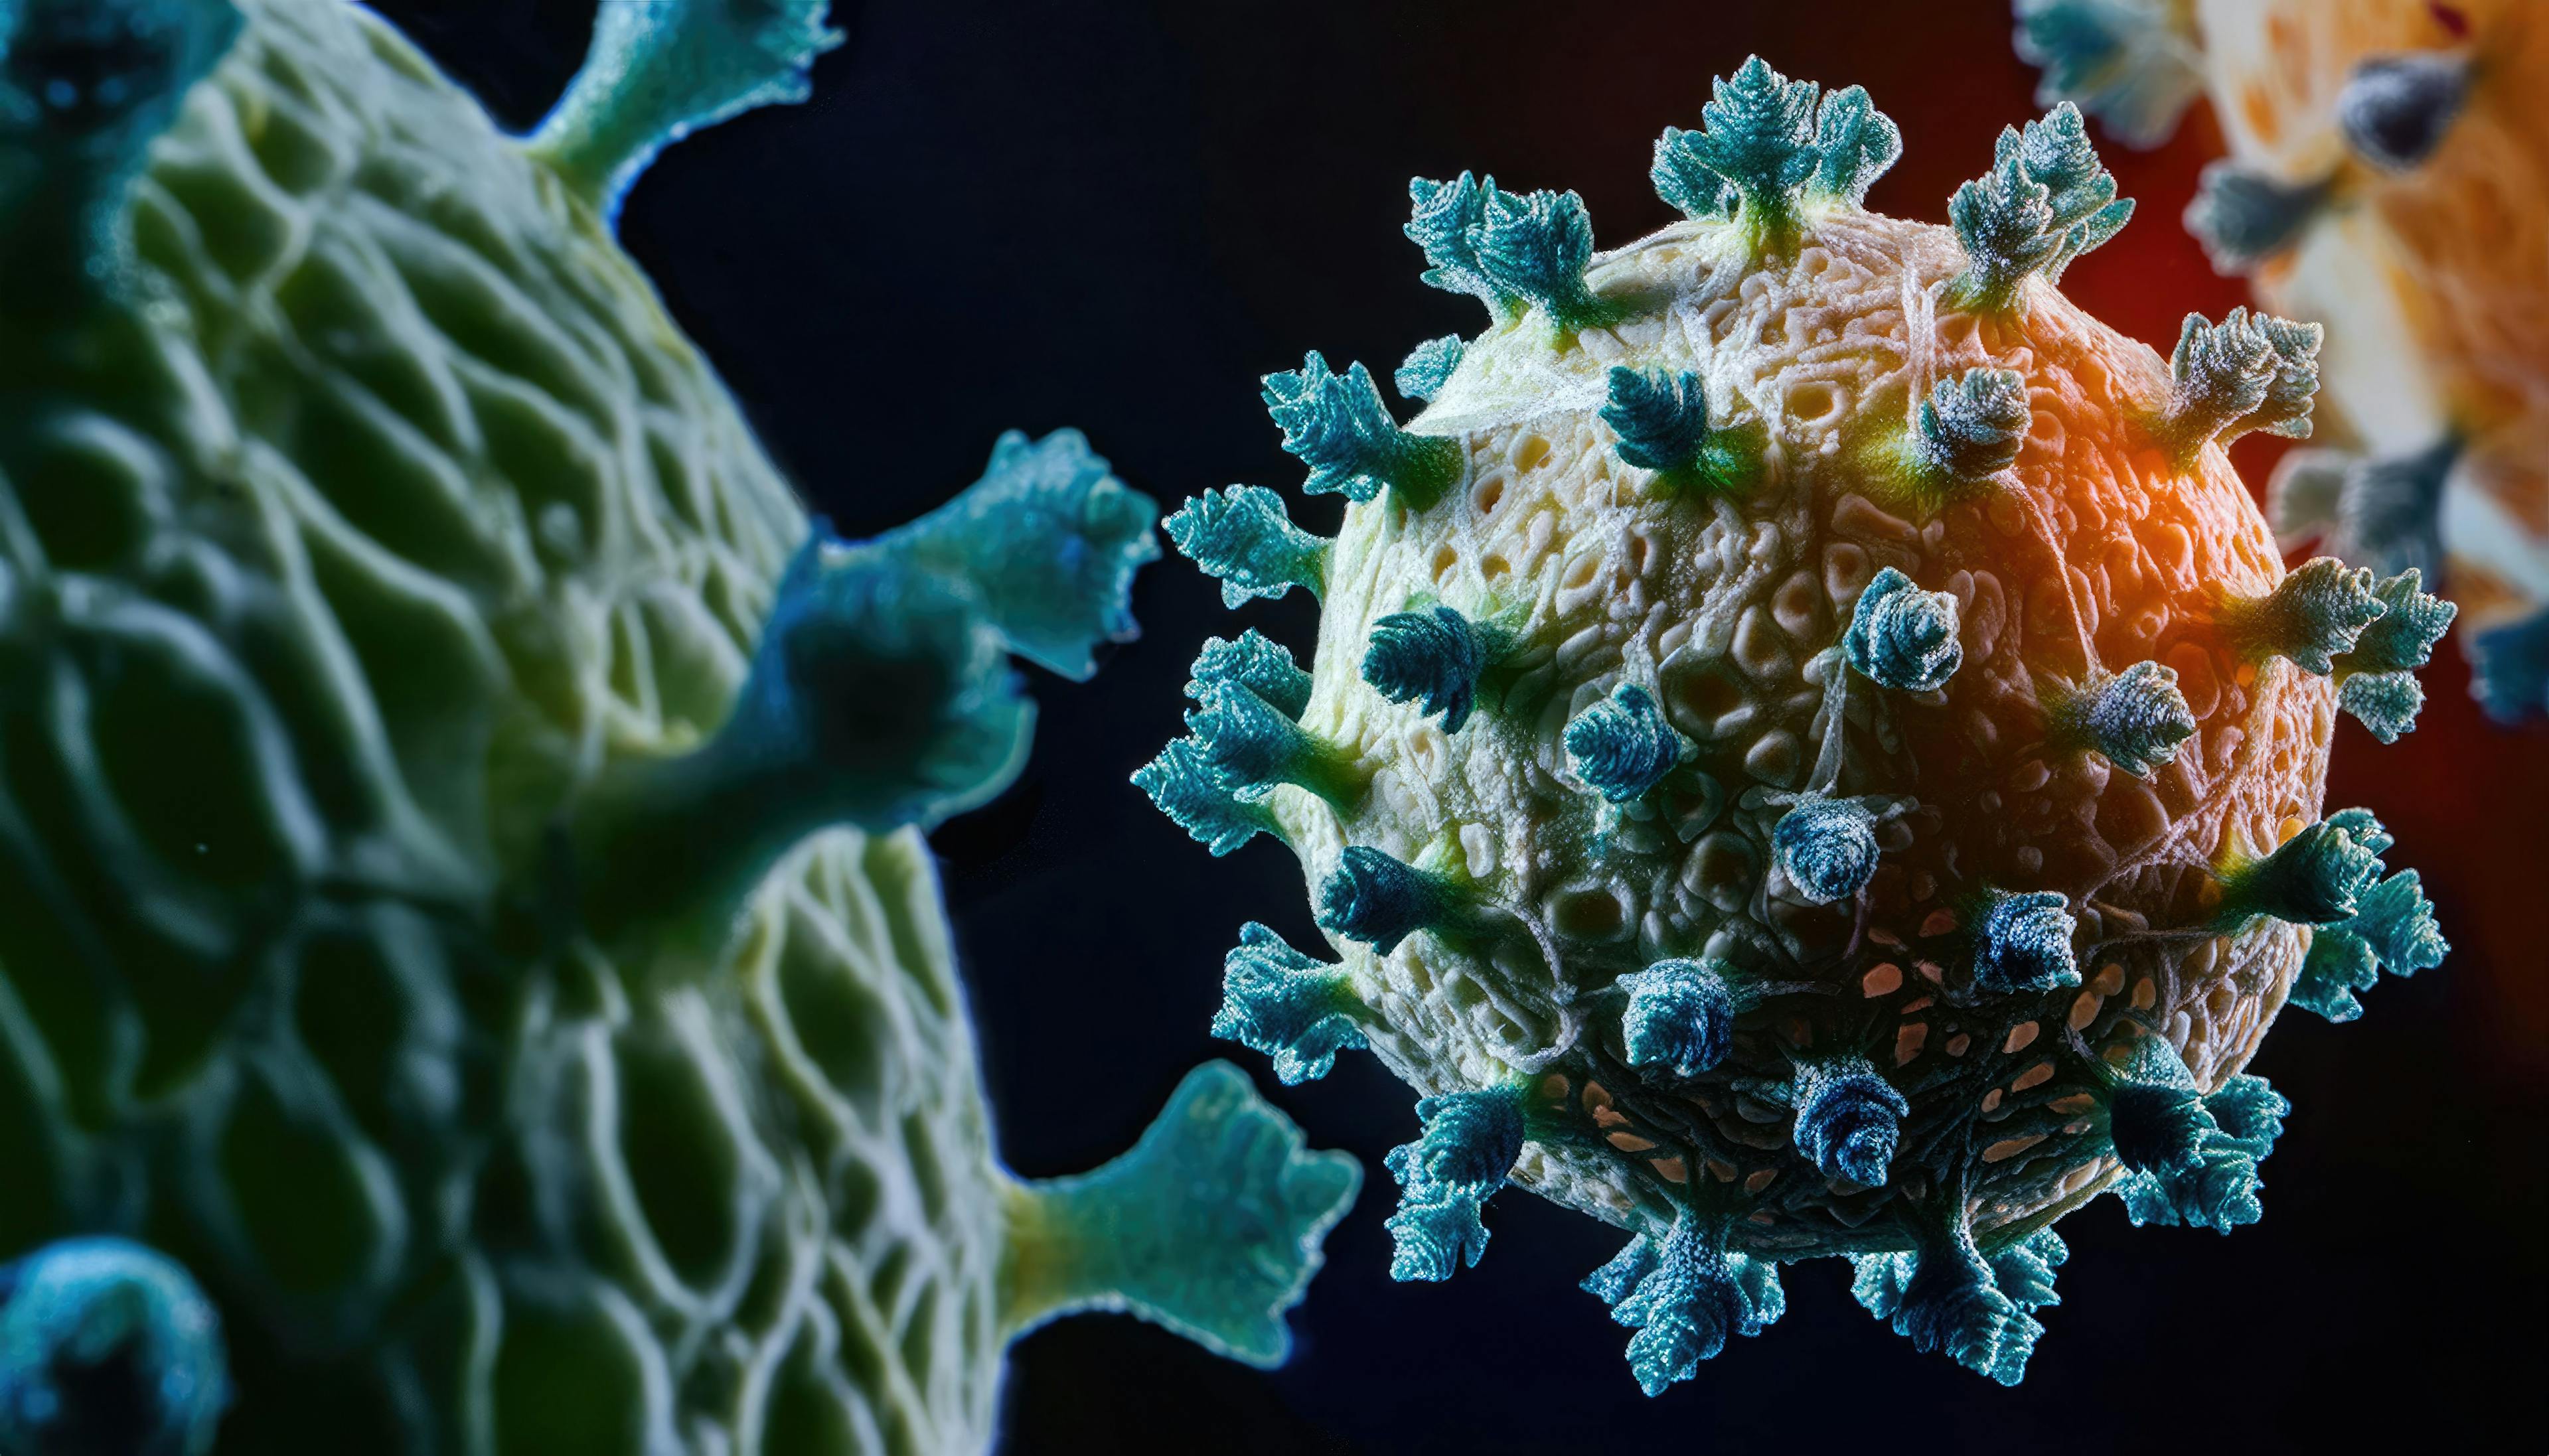 Respiratory Virus Genetic Material Micrograph - Image credit: GOLVR | stock.adobe.com